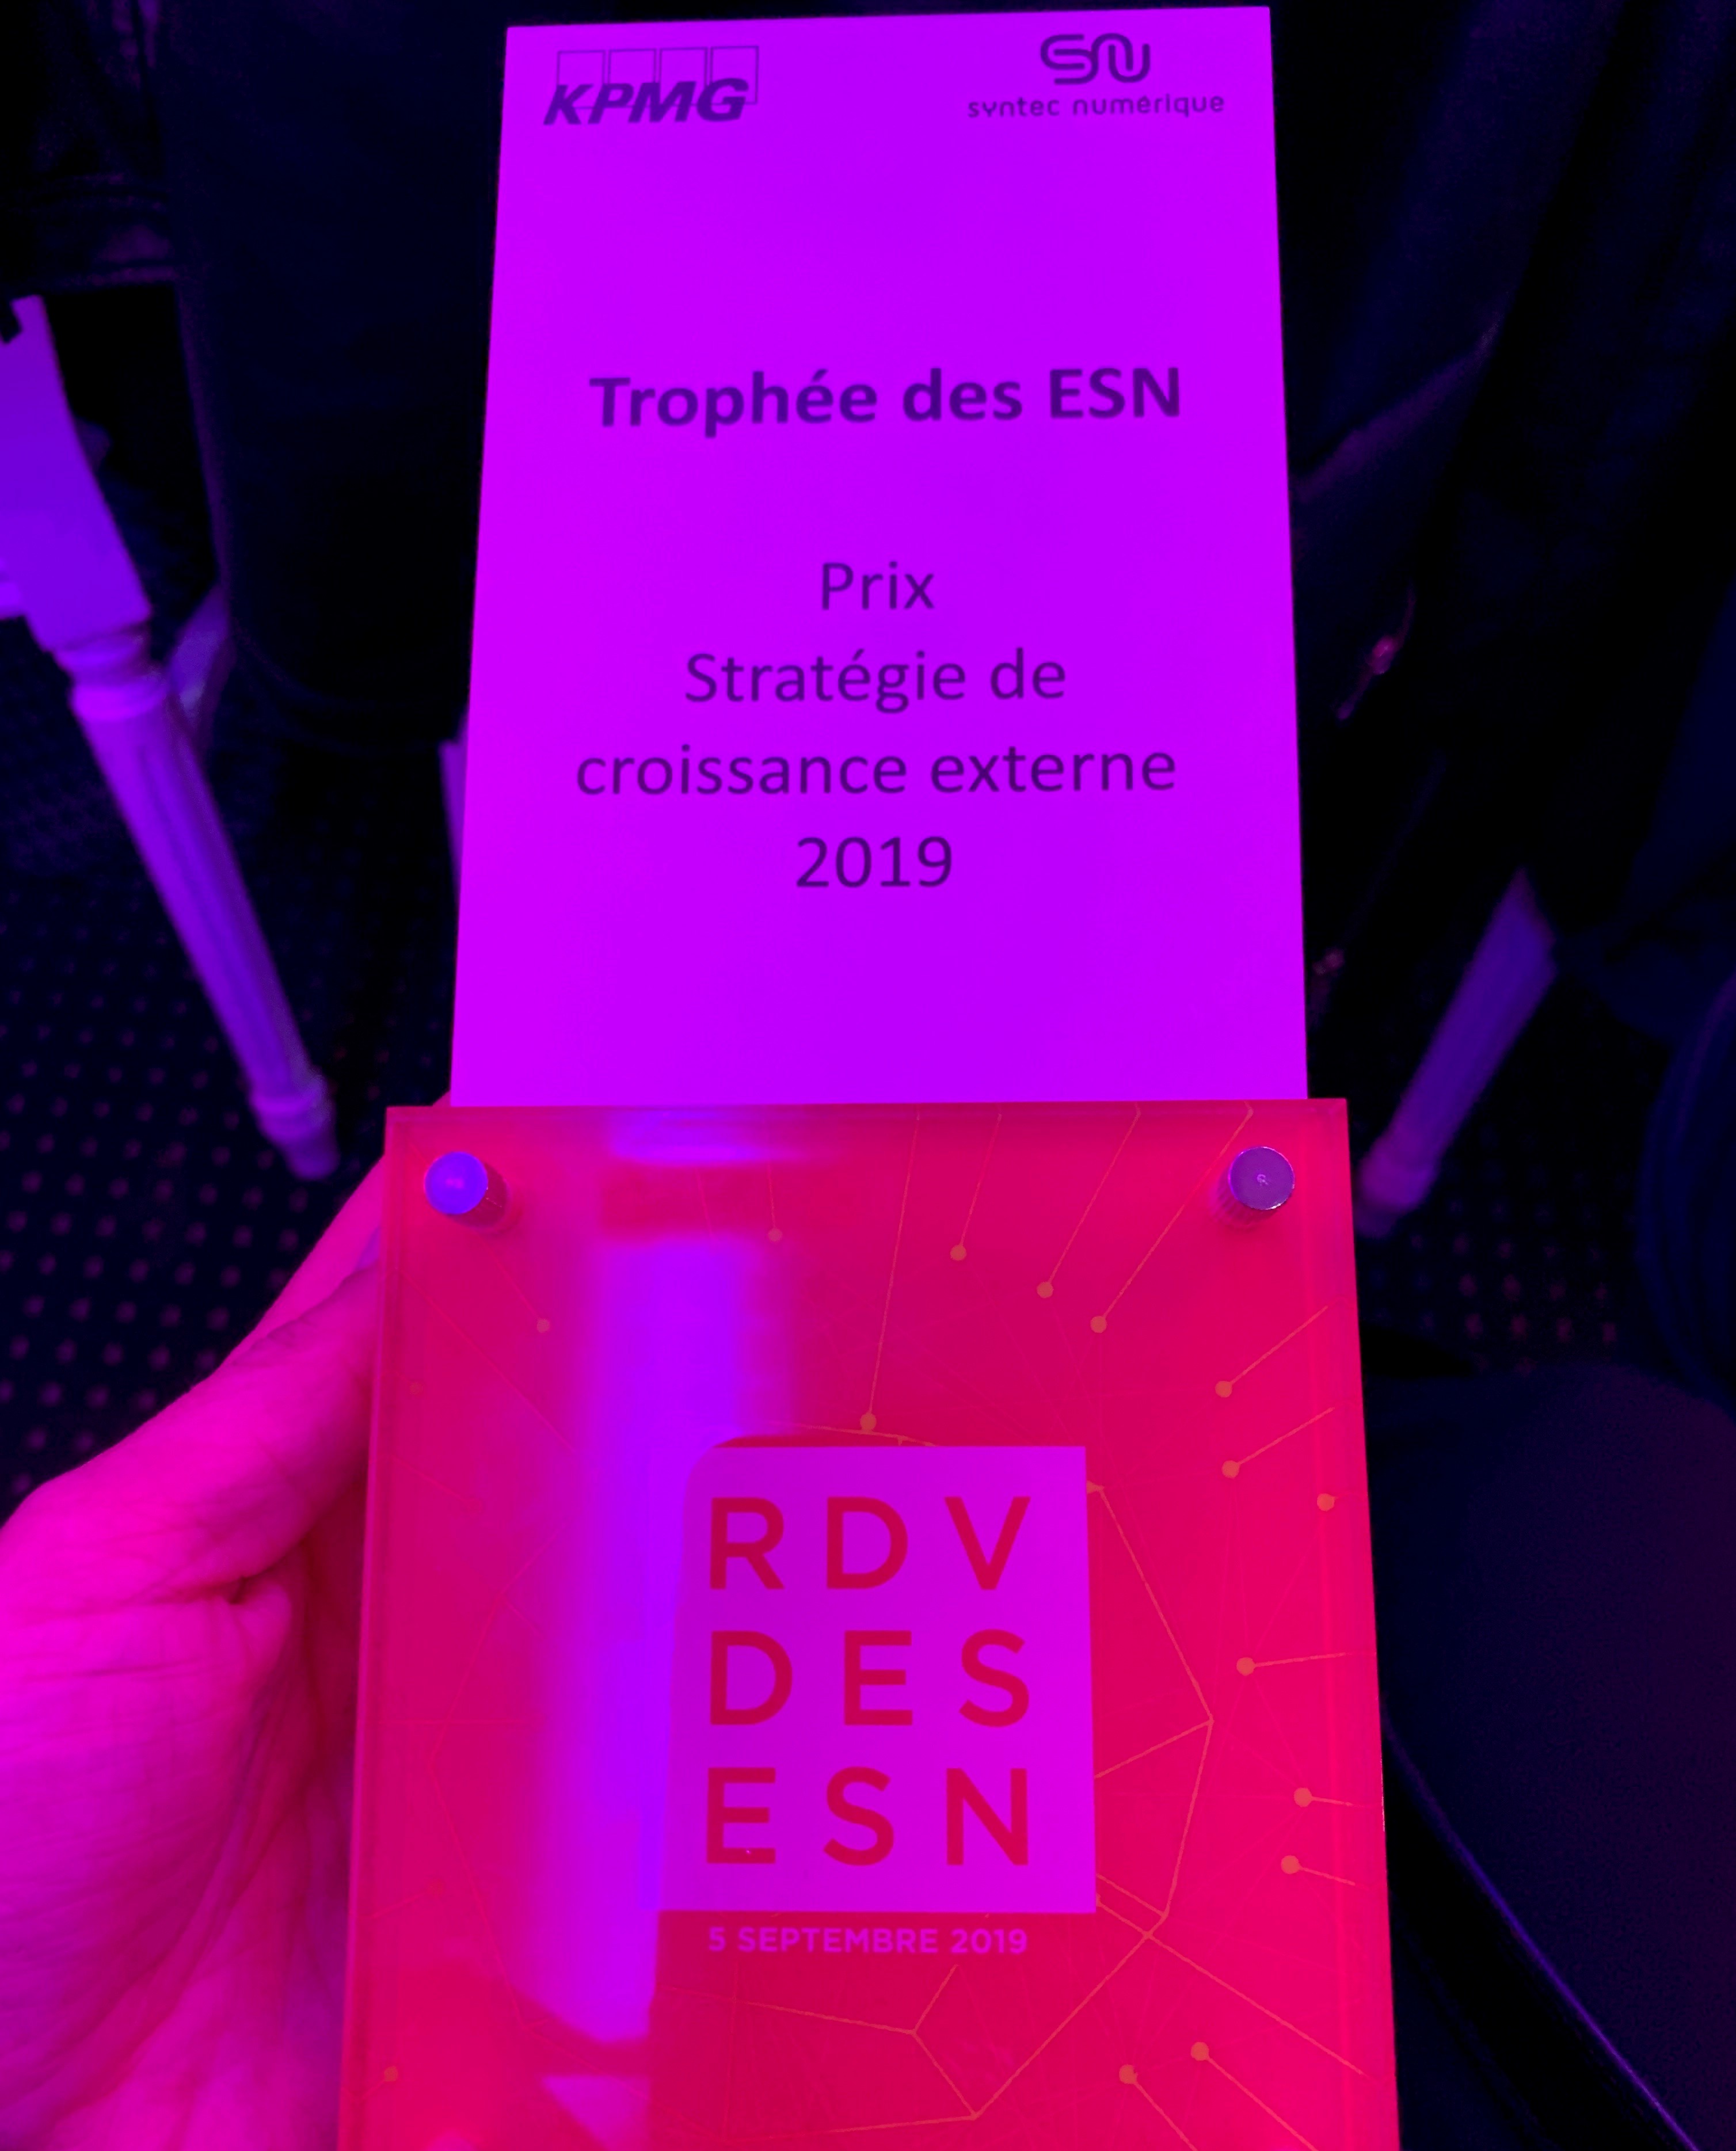 Trophée des ESN 2019 by VISEO